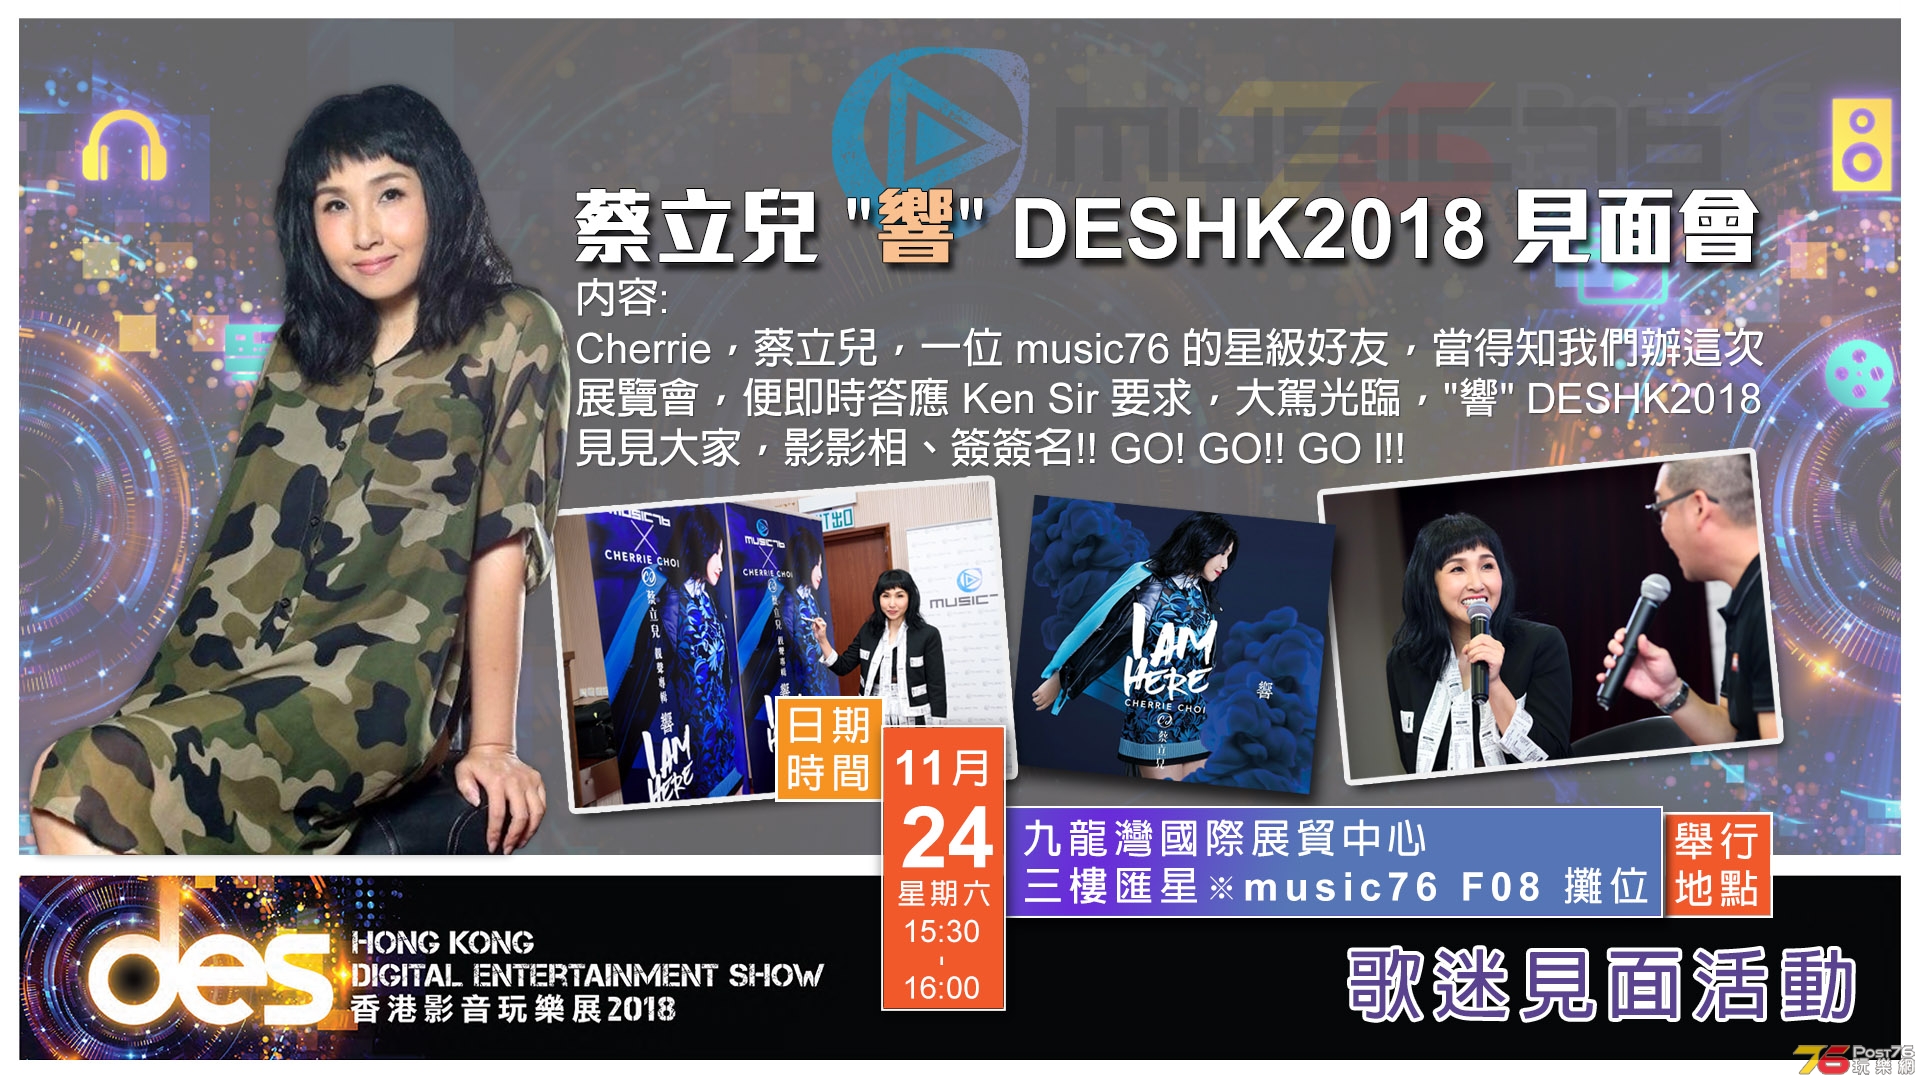 DESHK2018 24-11-2018 08 蔡立兒.jpg